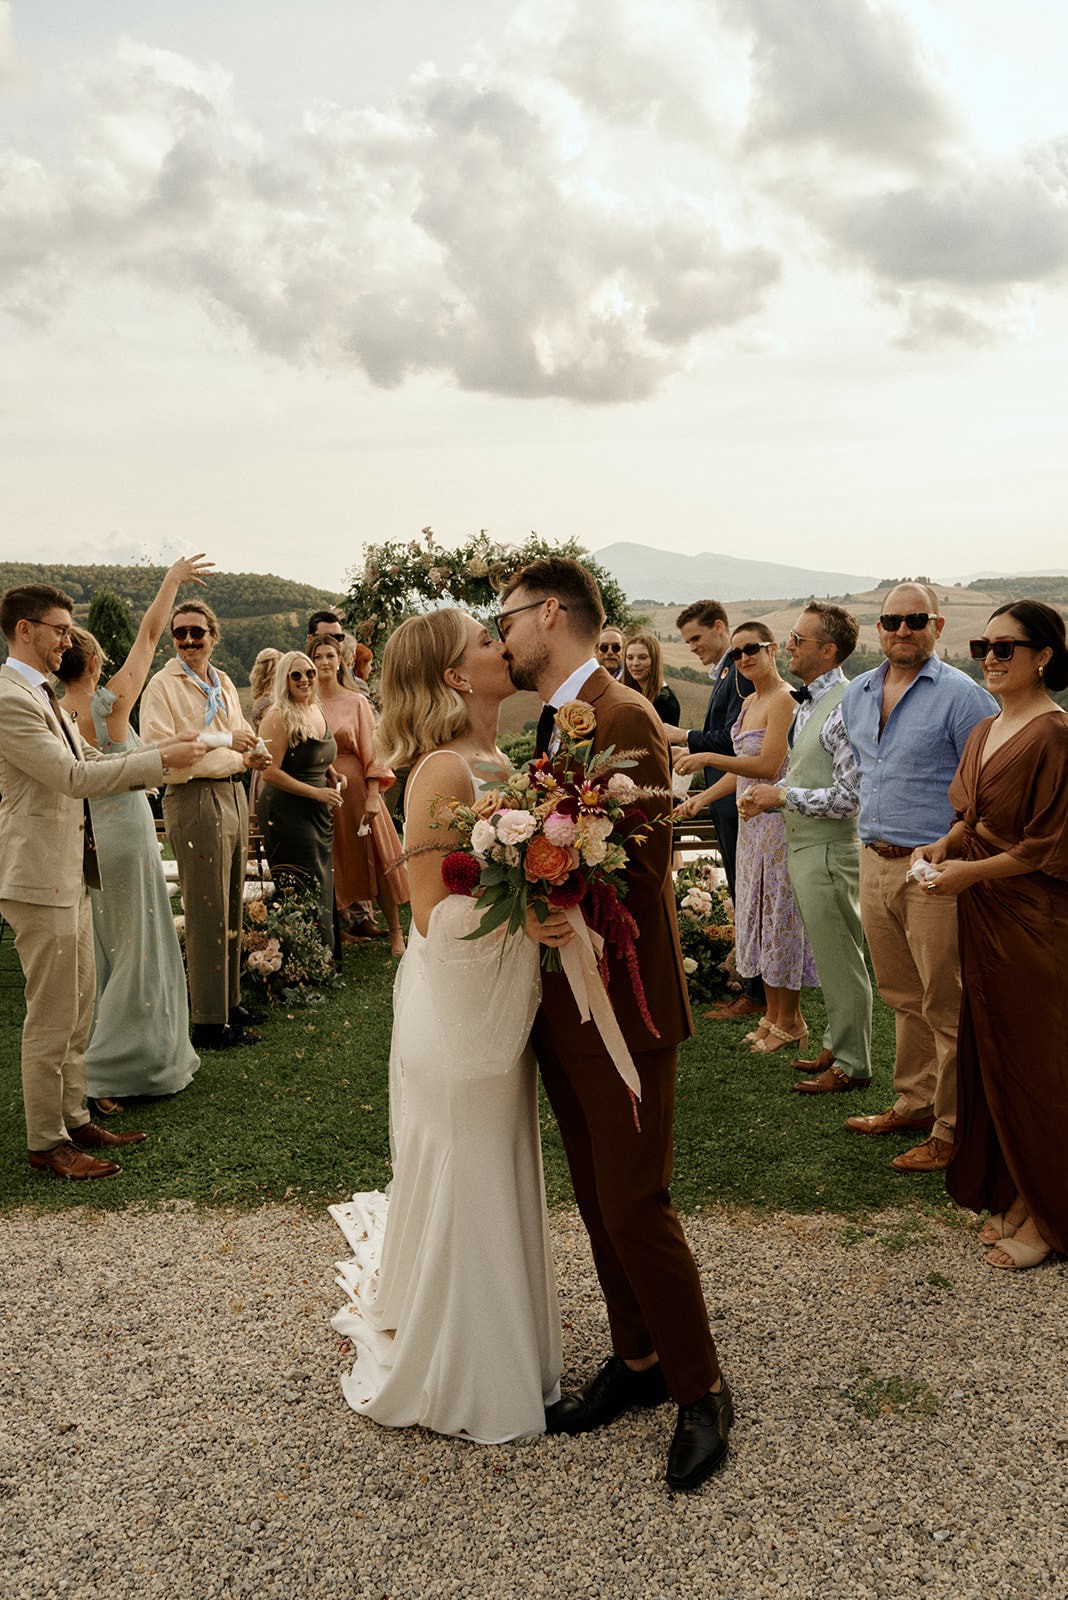 Ceremony Gallery - Wedding Photography at Terre di Nano, Tuscany